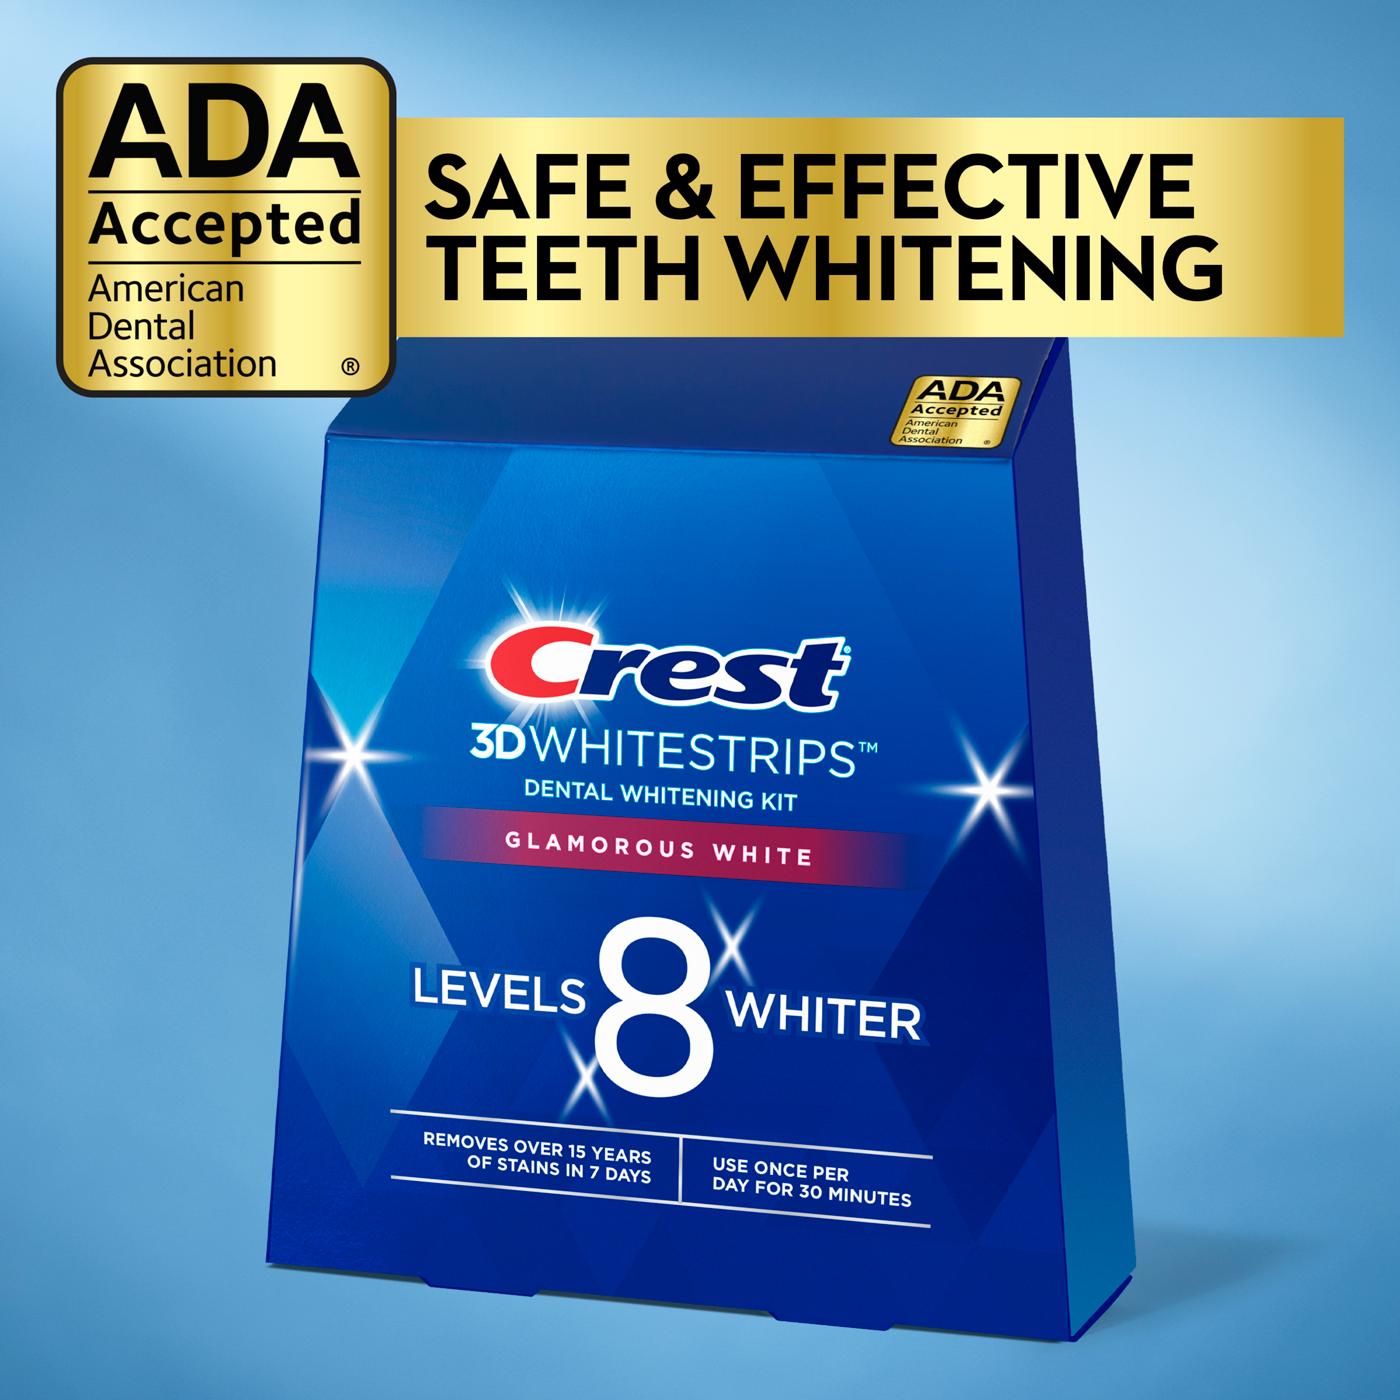 Crest 3DWhitestrips Dental Whitening Kit - Glamorous White; image 4 of 8